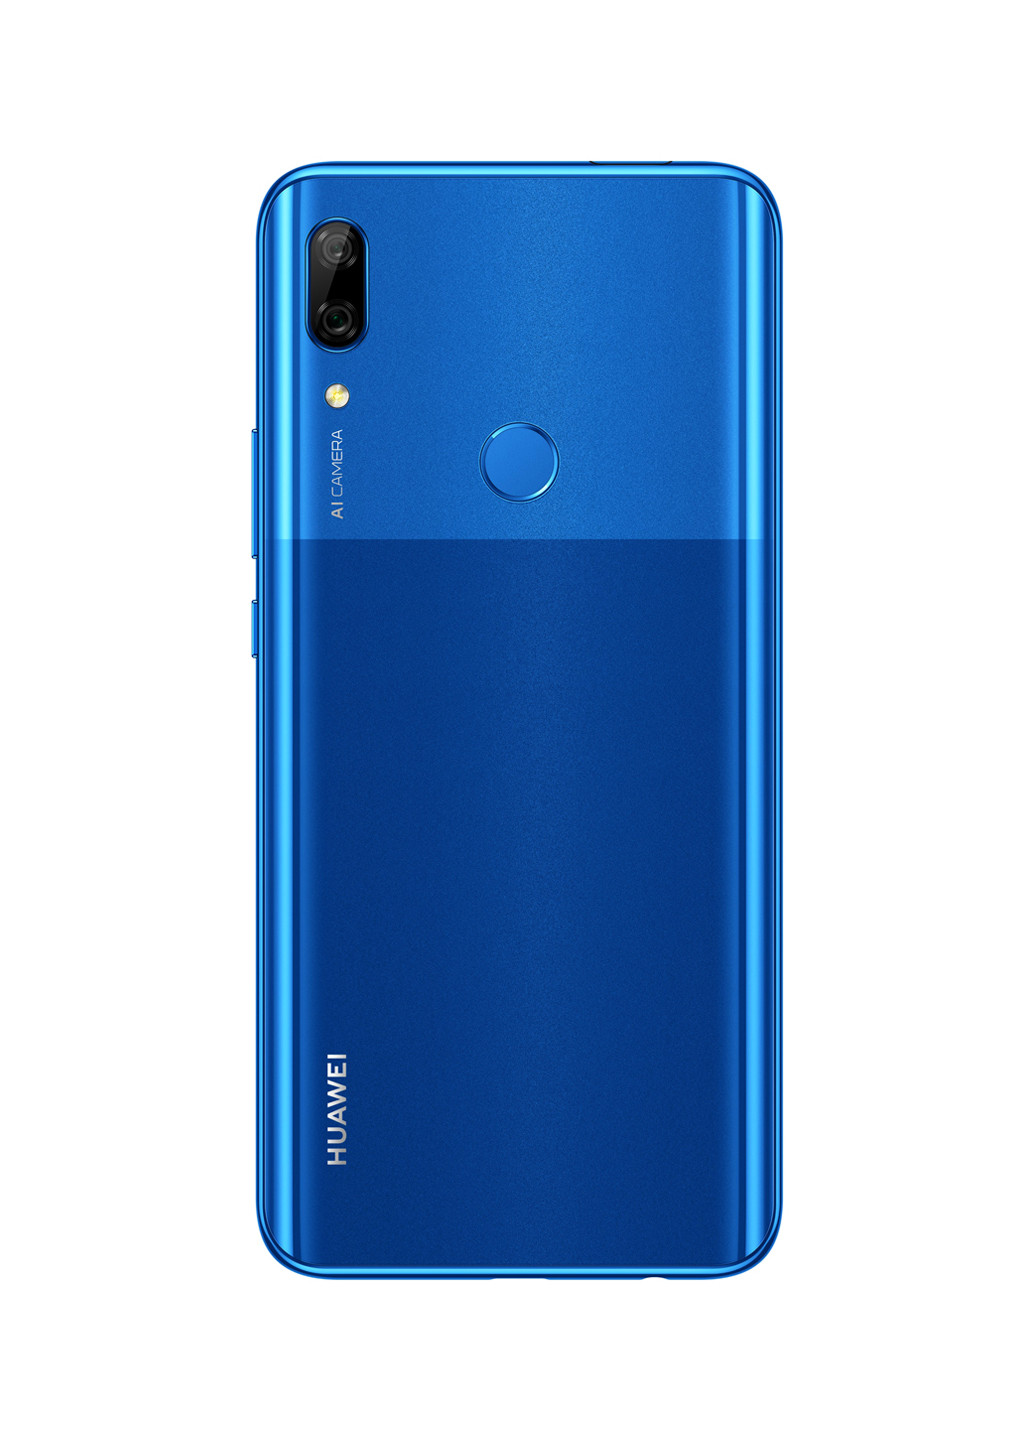 Смартфон P SMART Z 4 / 64GB Blue (STK-LX1) Huawei p smart z 4/64gb blue (stk-lx1) (135191298)